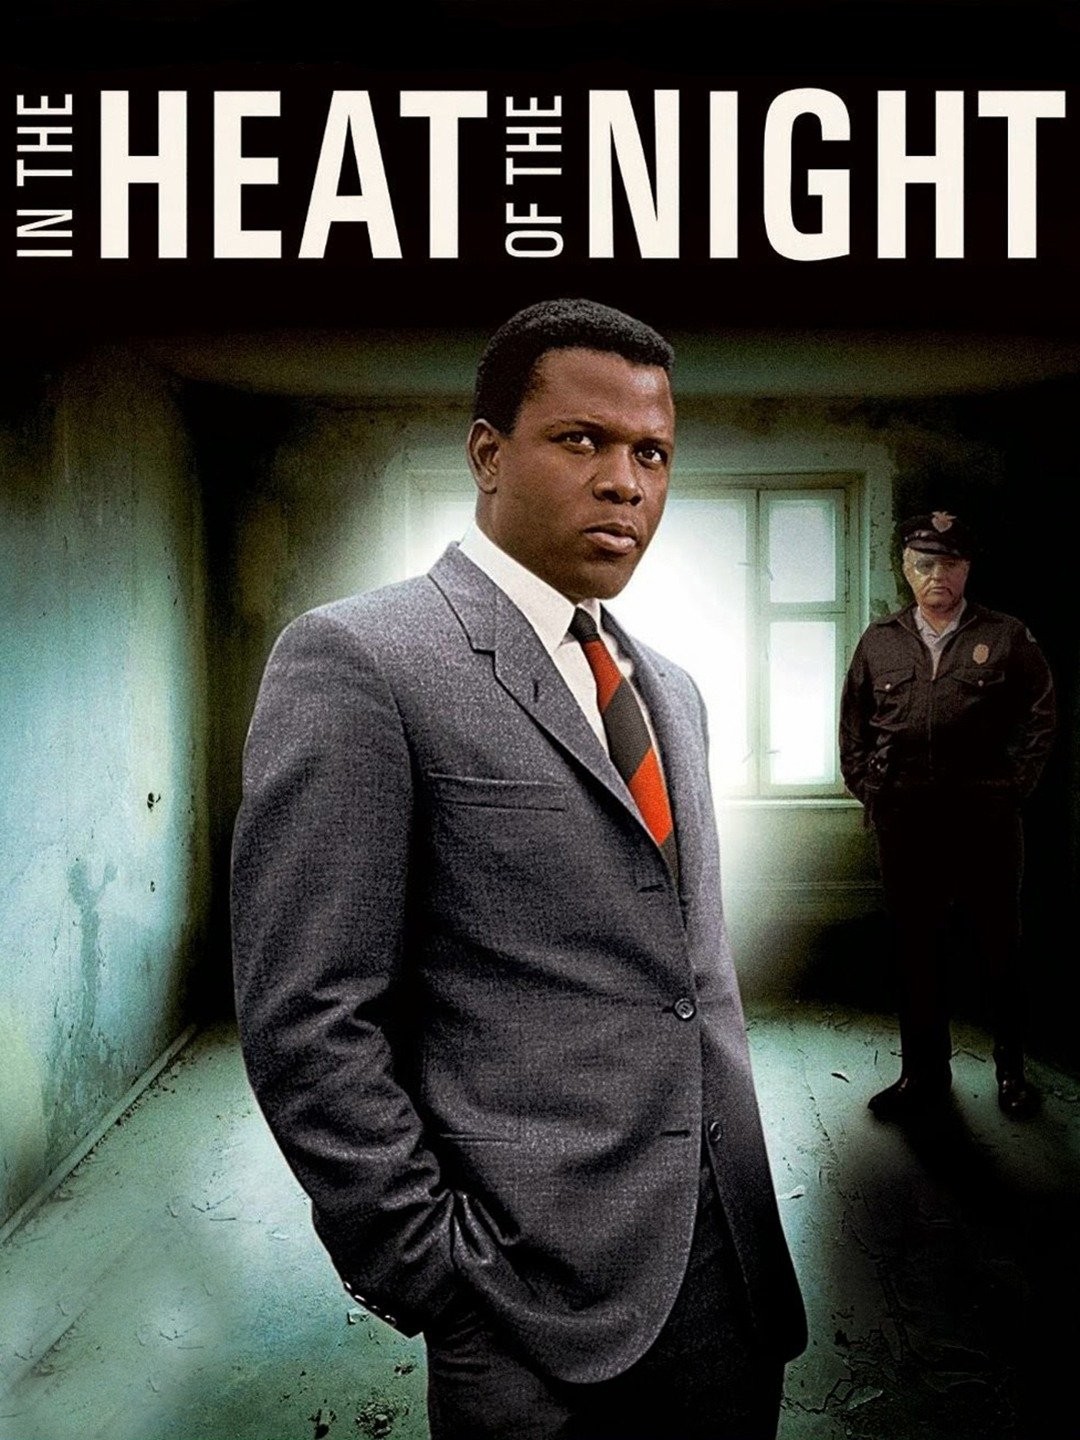 In the Heat of the Night (film) - Wikipedia